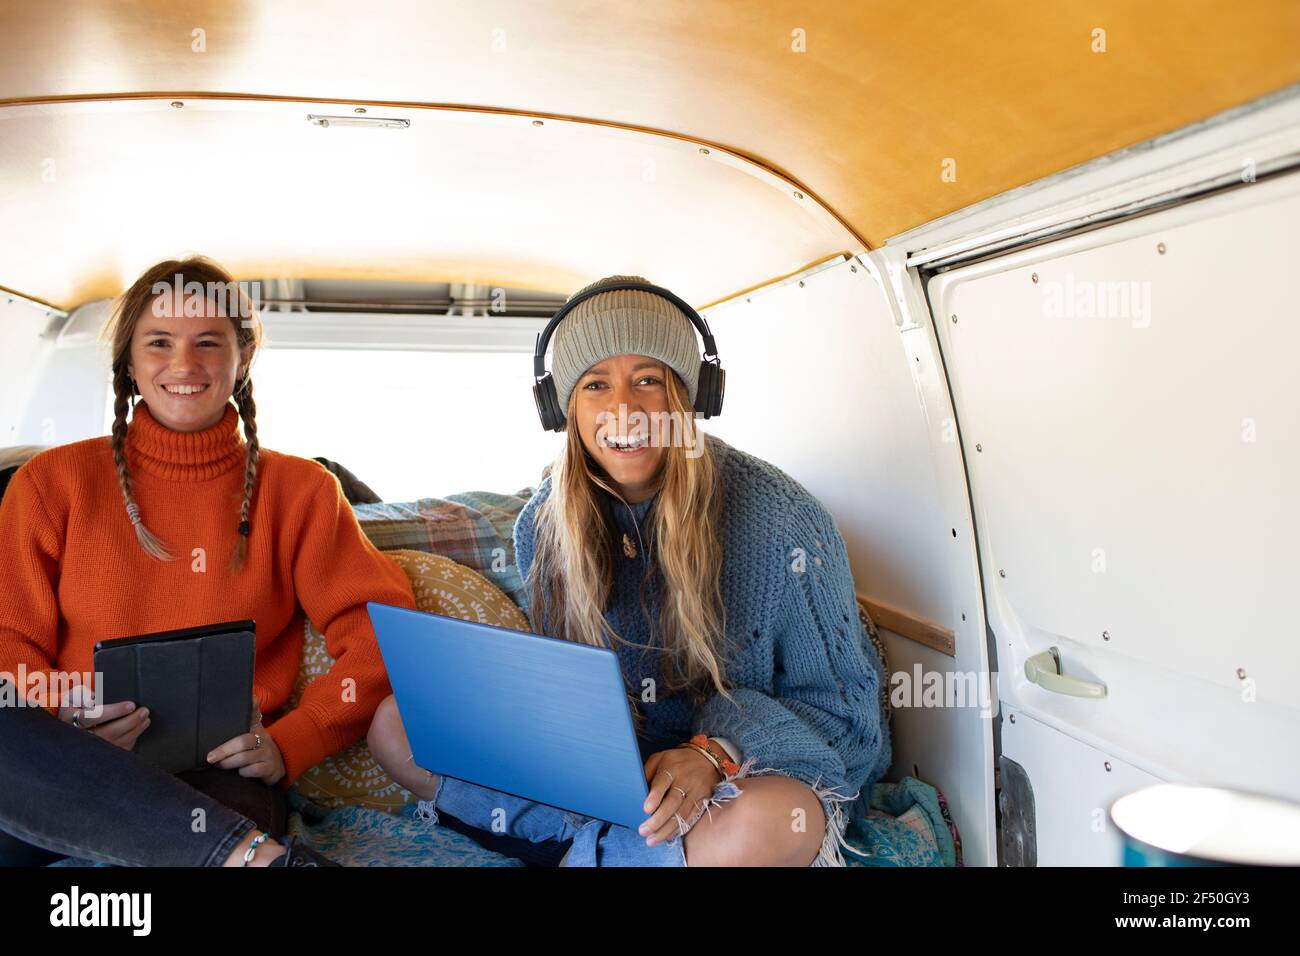 Portrait happy young women friends using technology in camper van Stock Photo